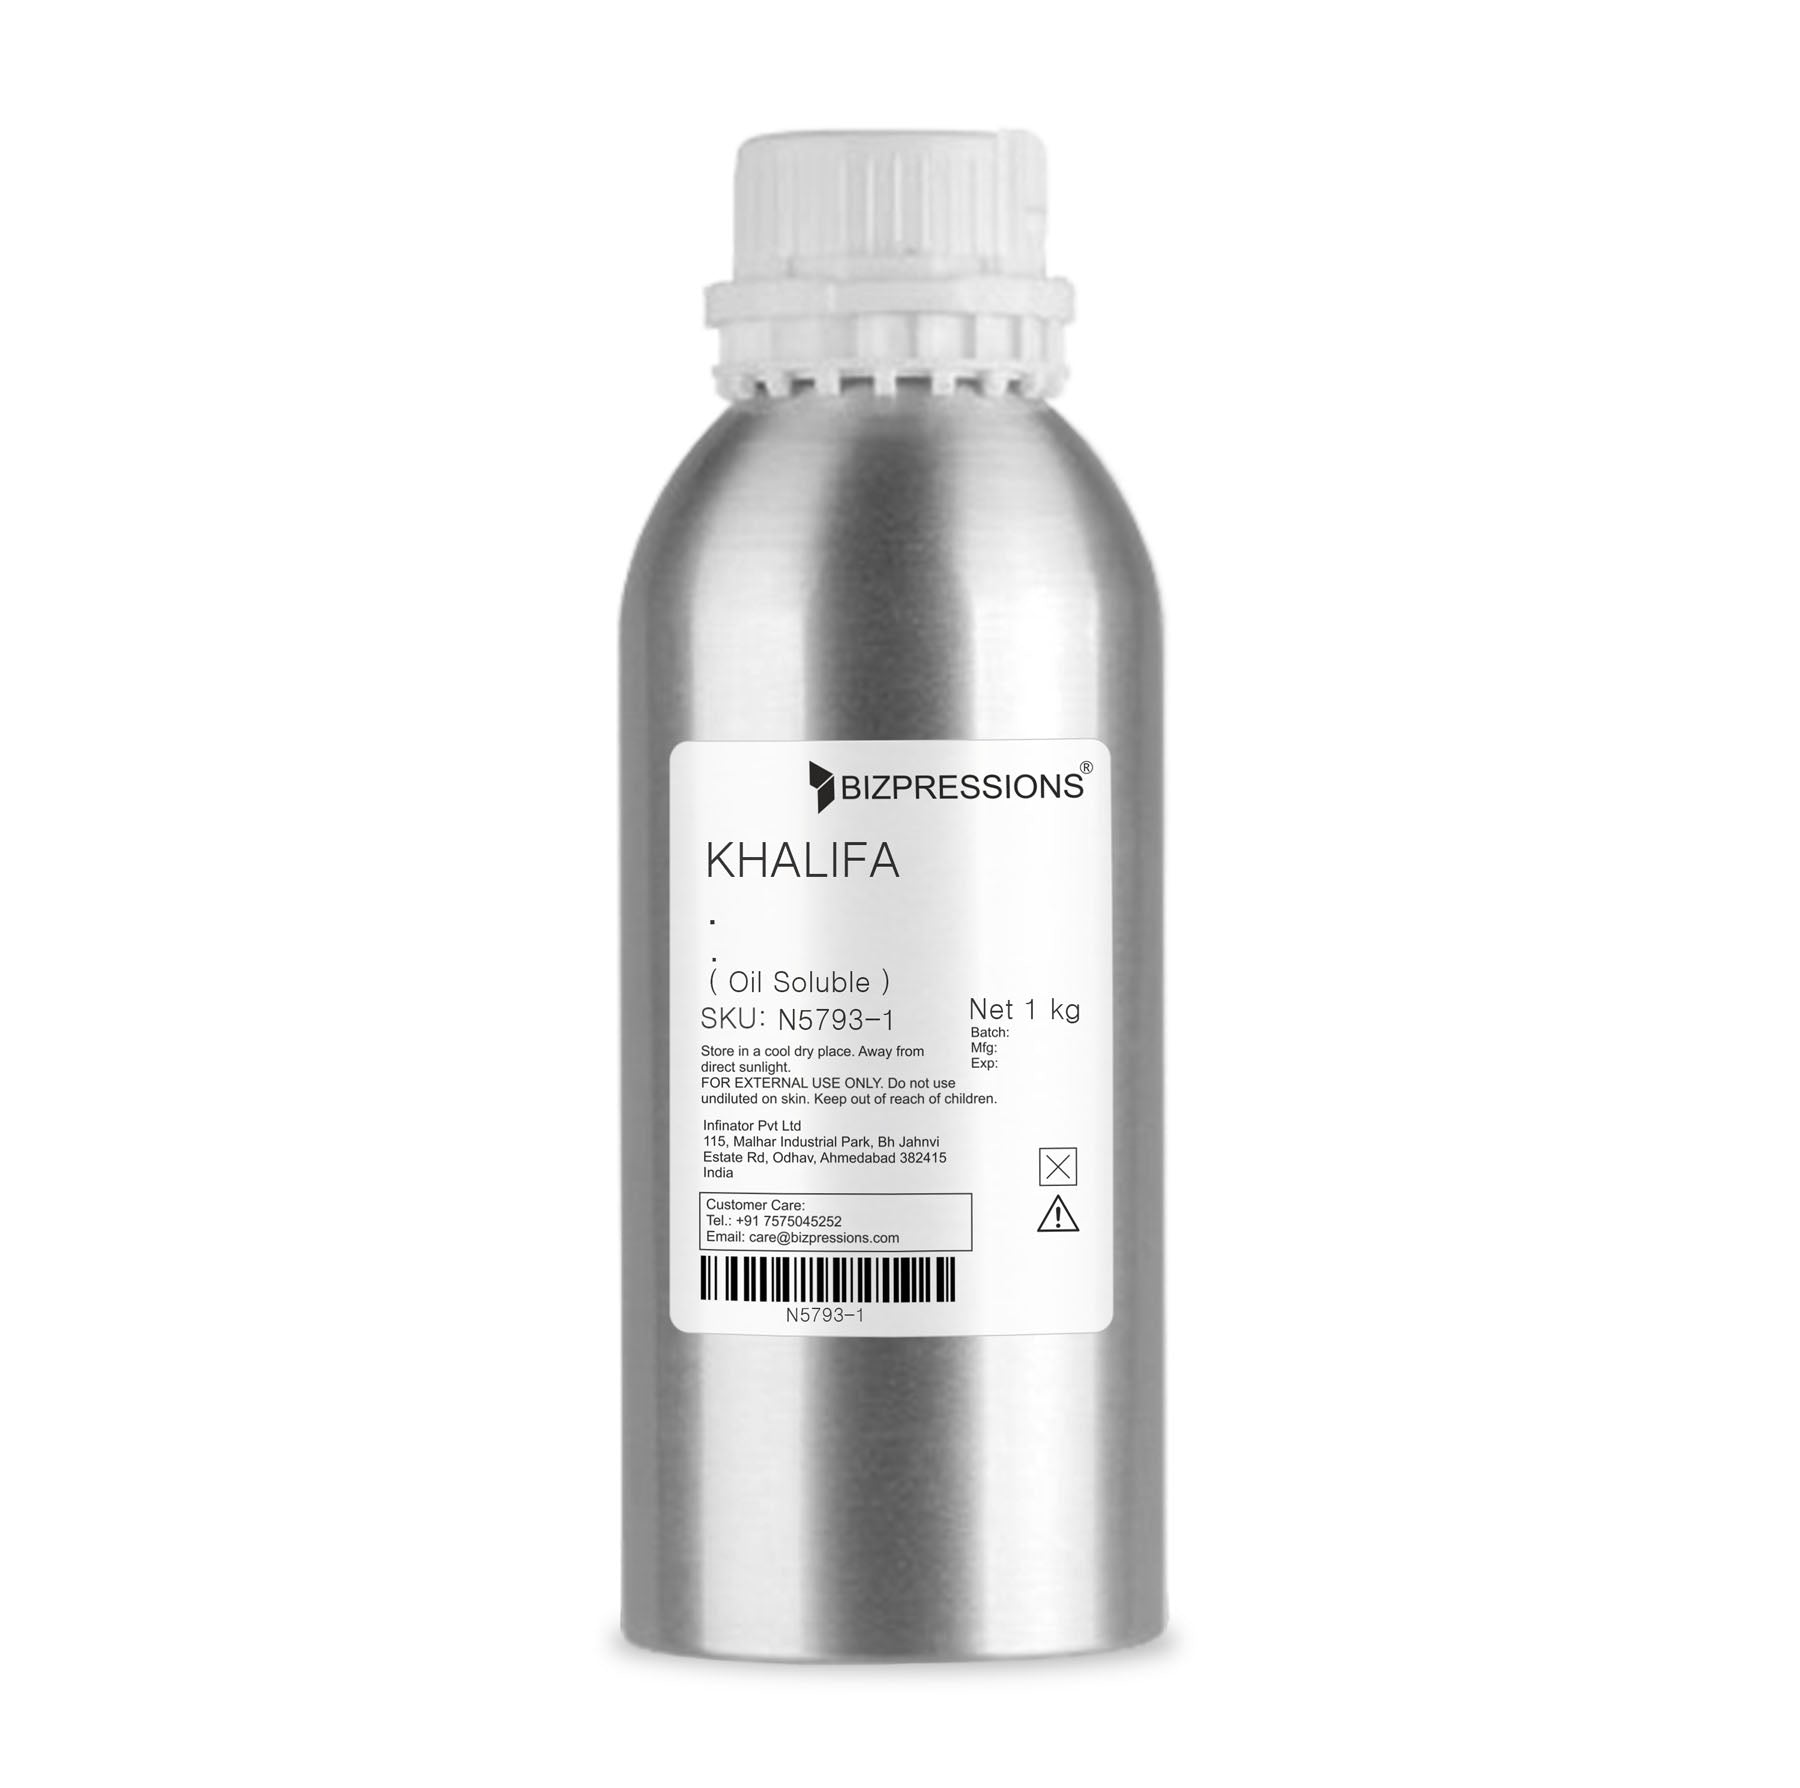 KHALIFA - Fragrance ( Oil Soluble ) - 1 kg